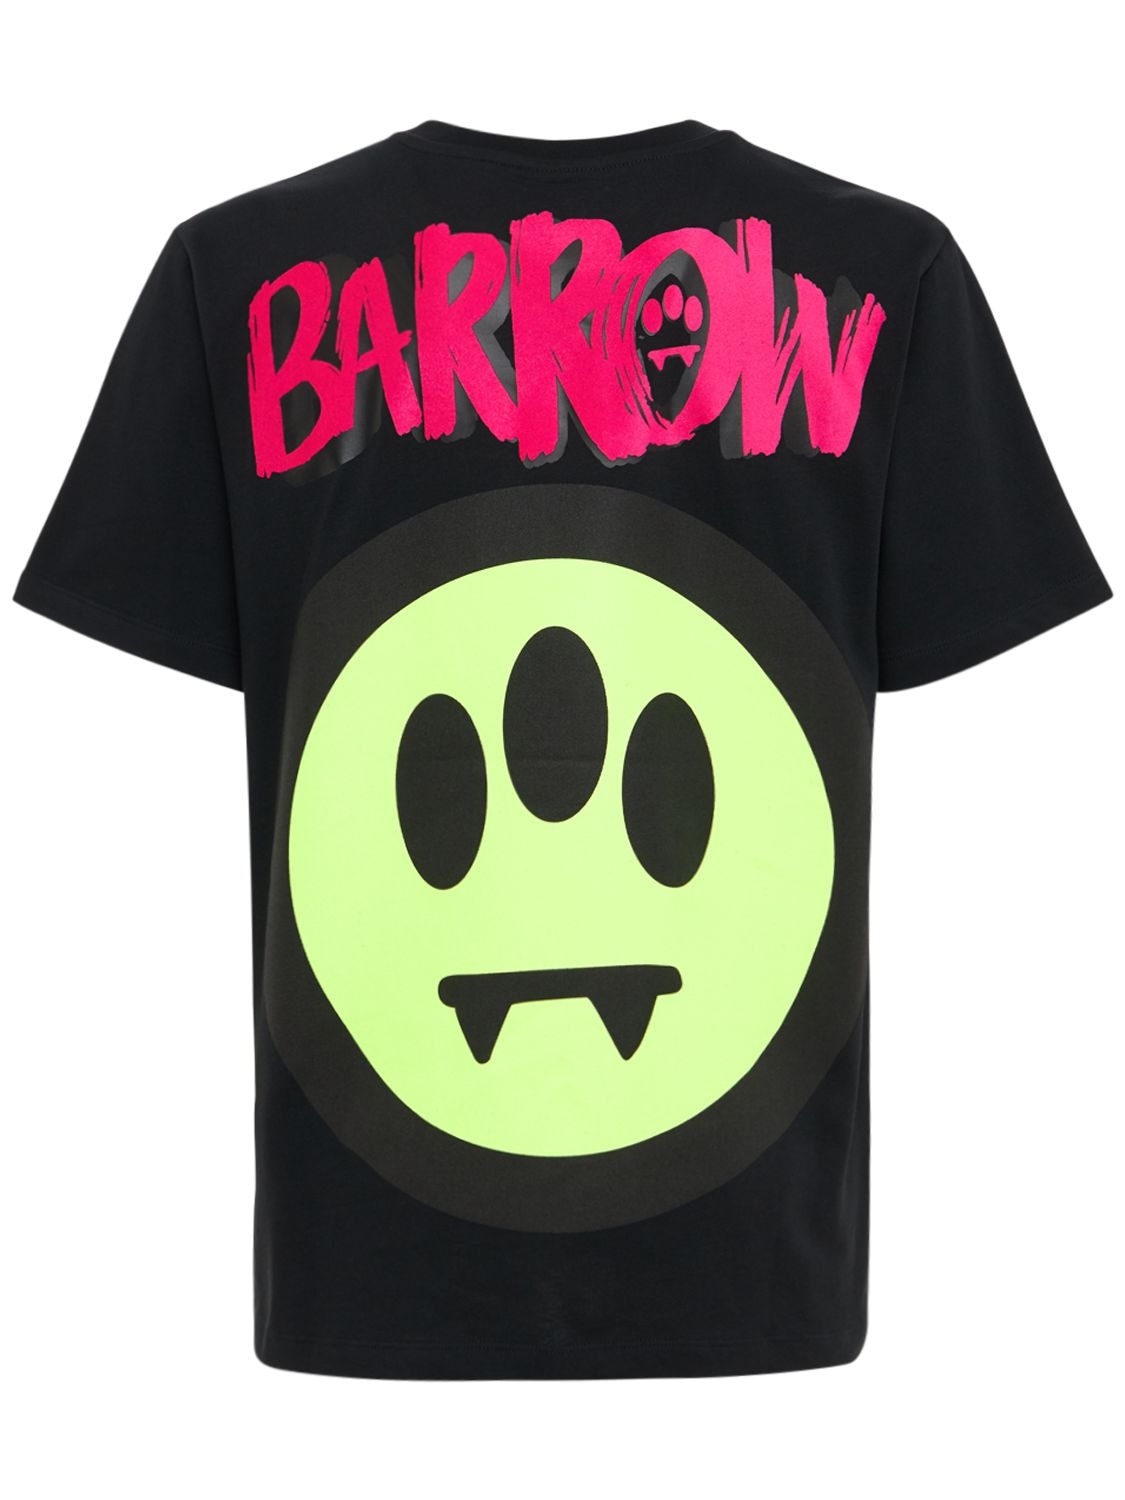 Barrow Logo Cotton T-shirt In Black